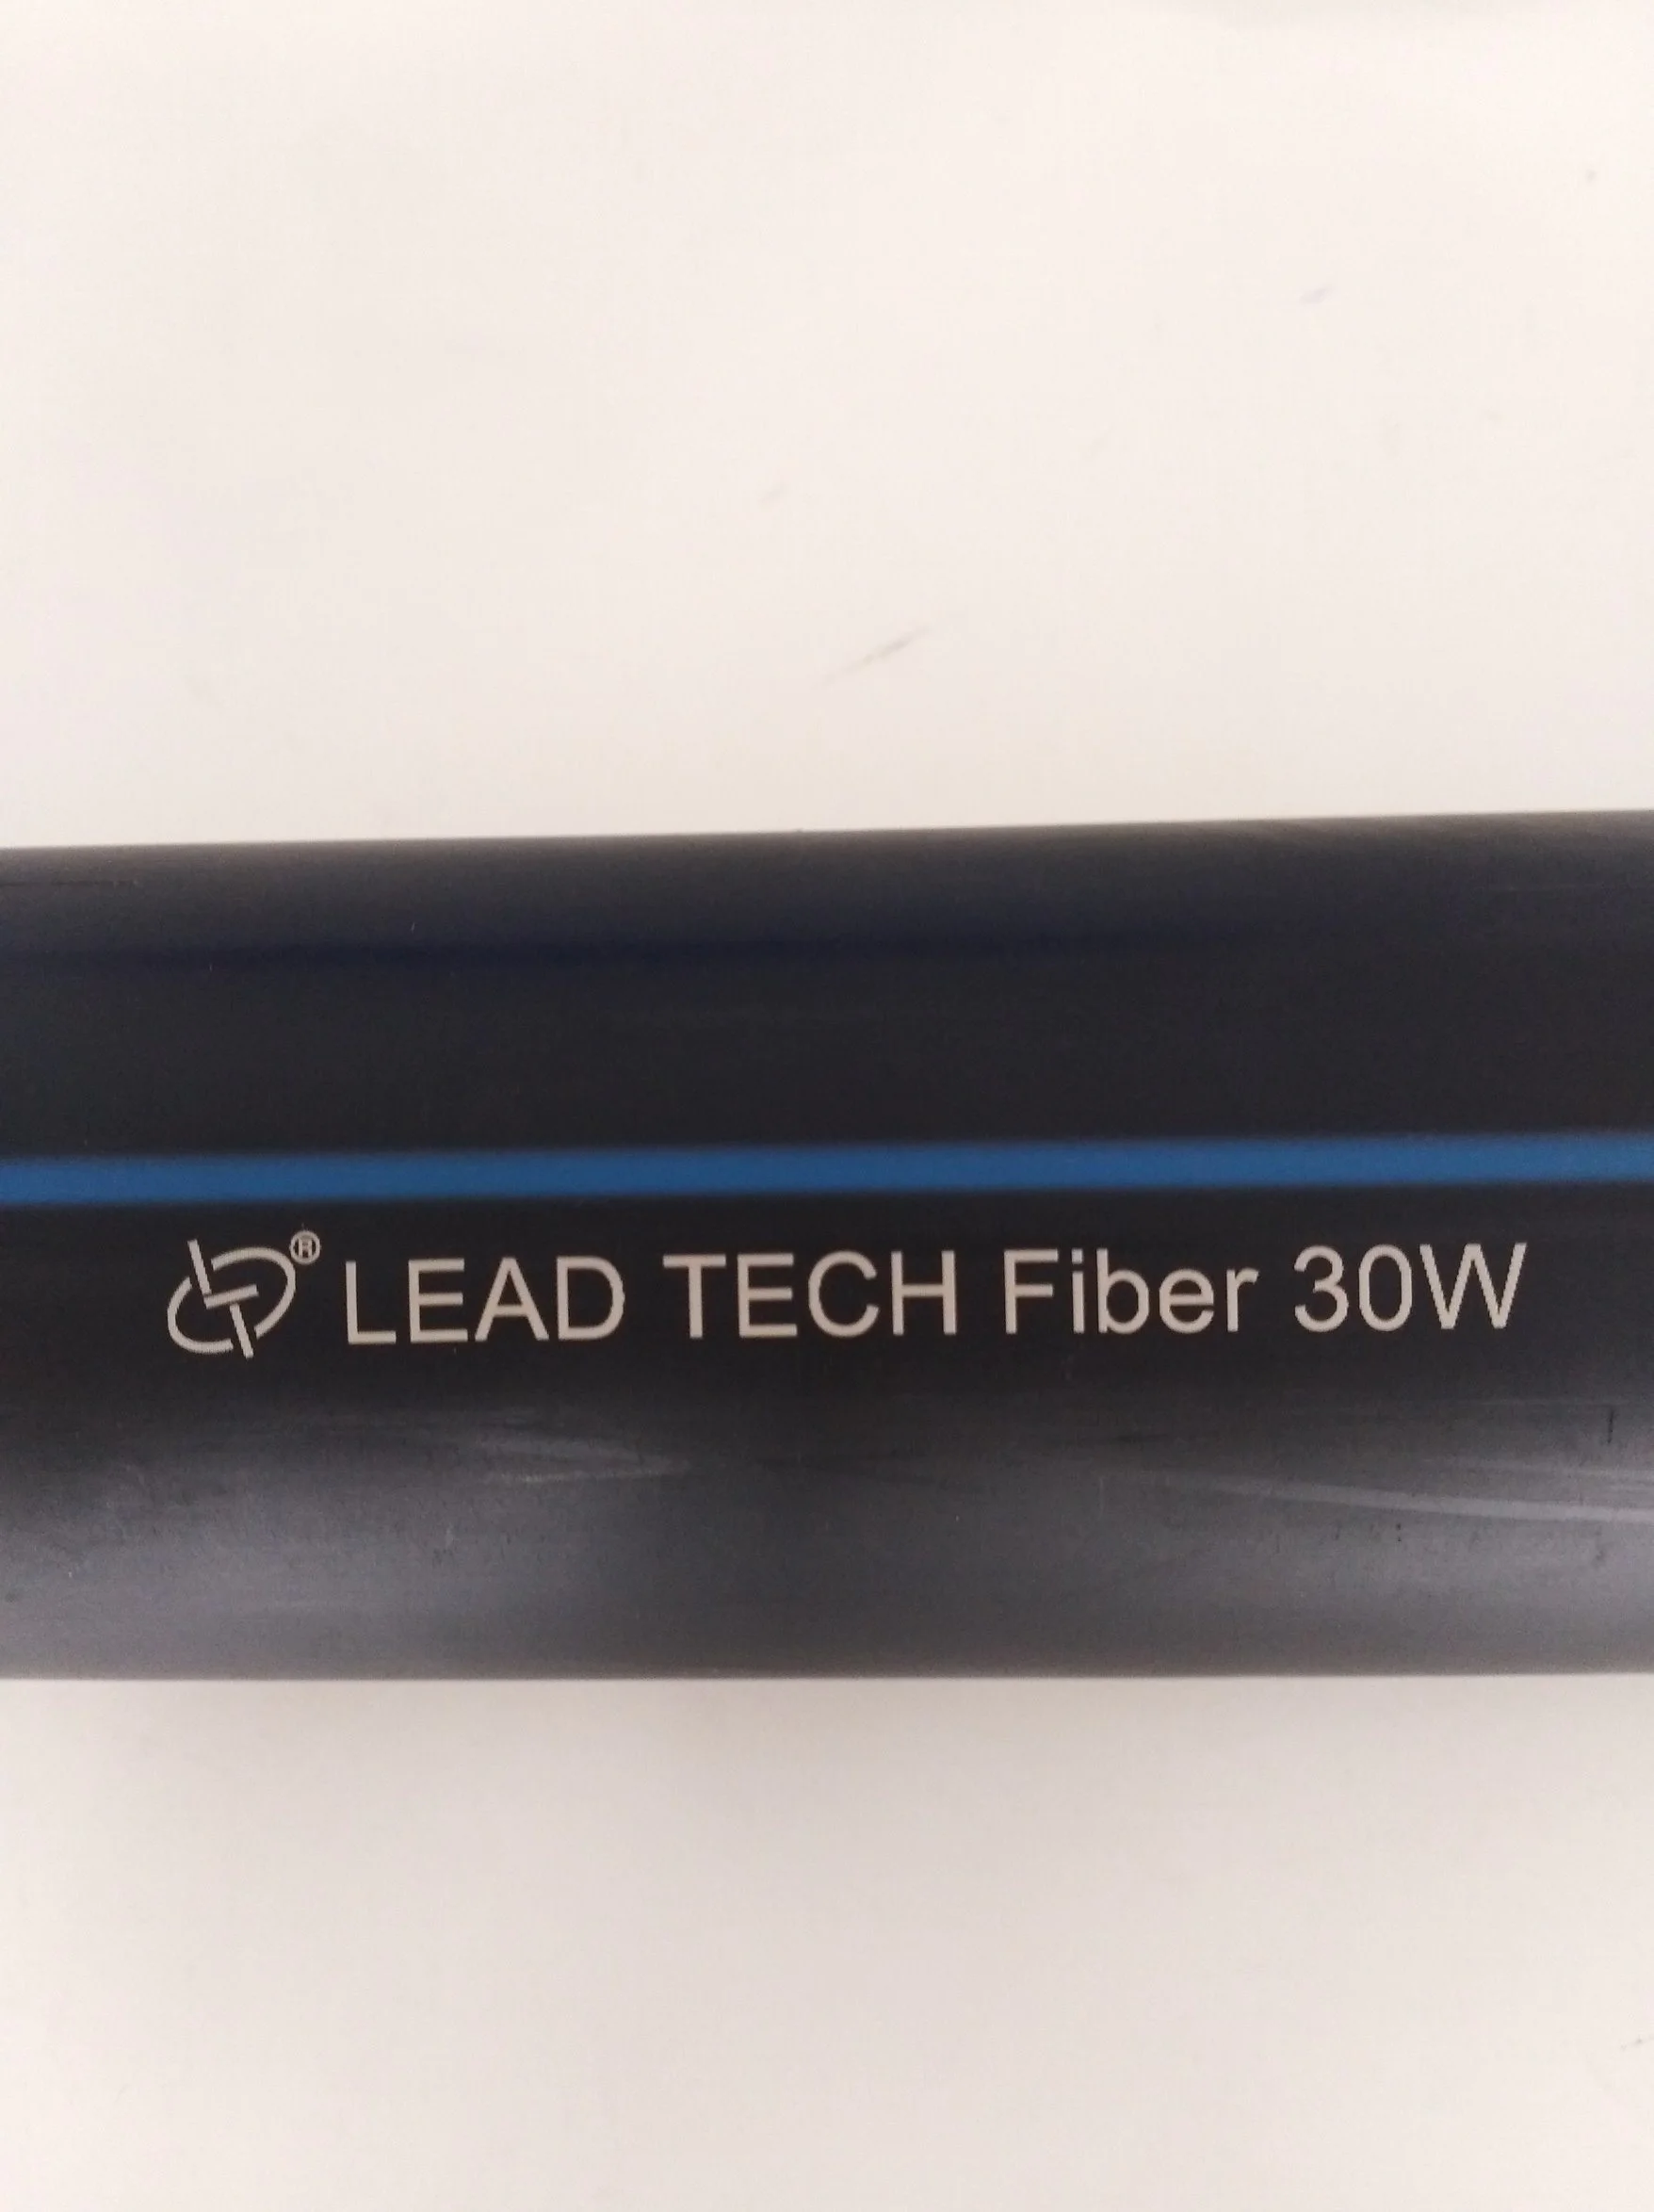 Lt8020f/Lt8030f/Lt8050f Fiber High Performance Plastic Laser Printer